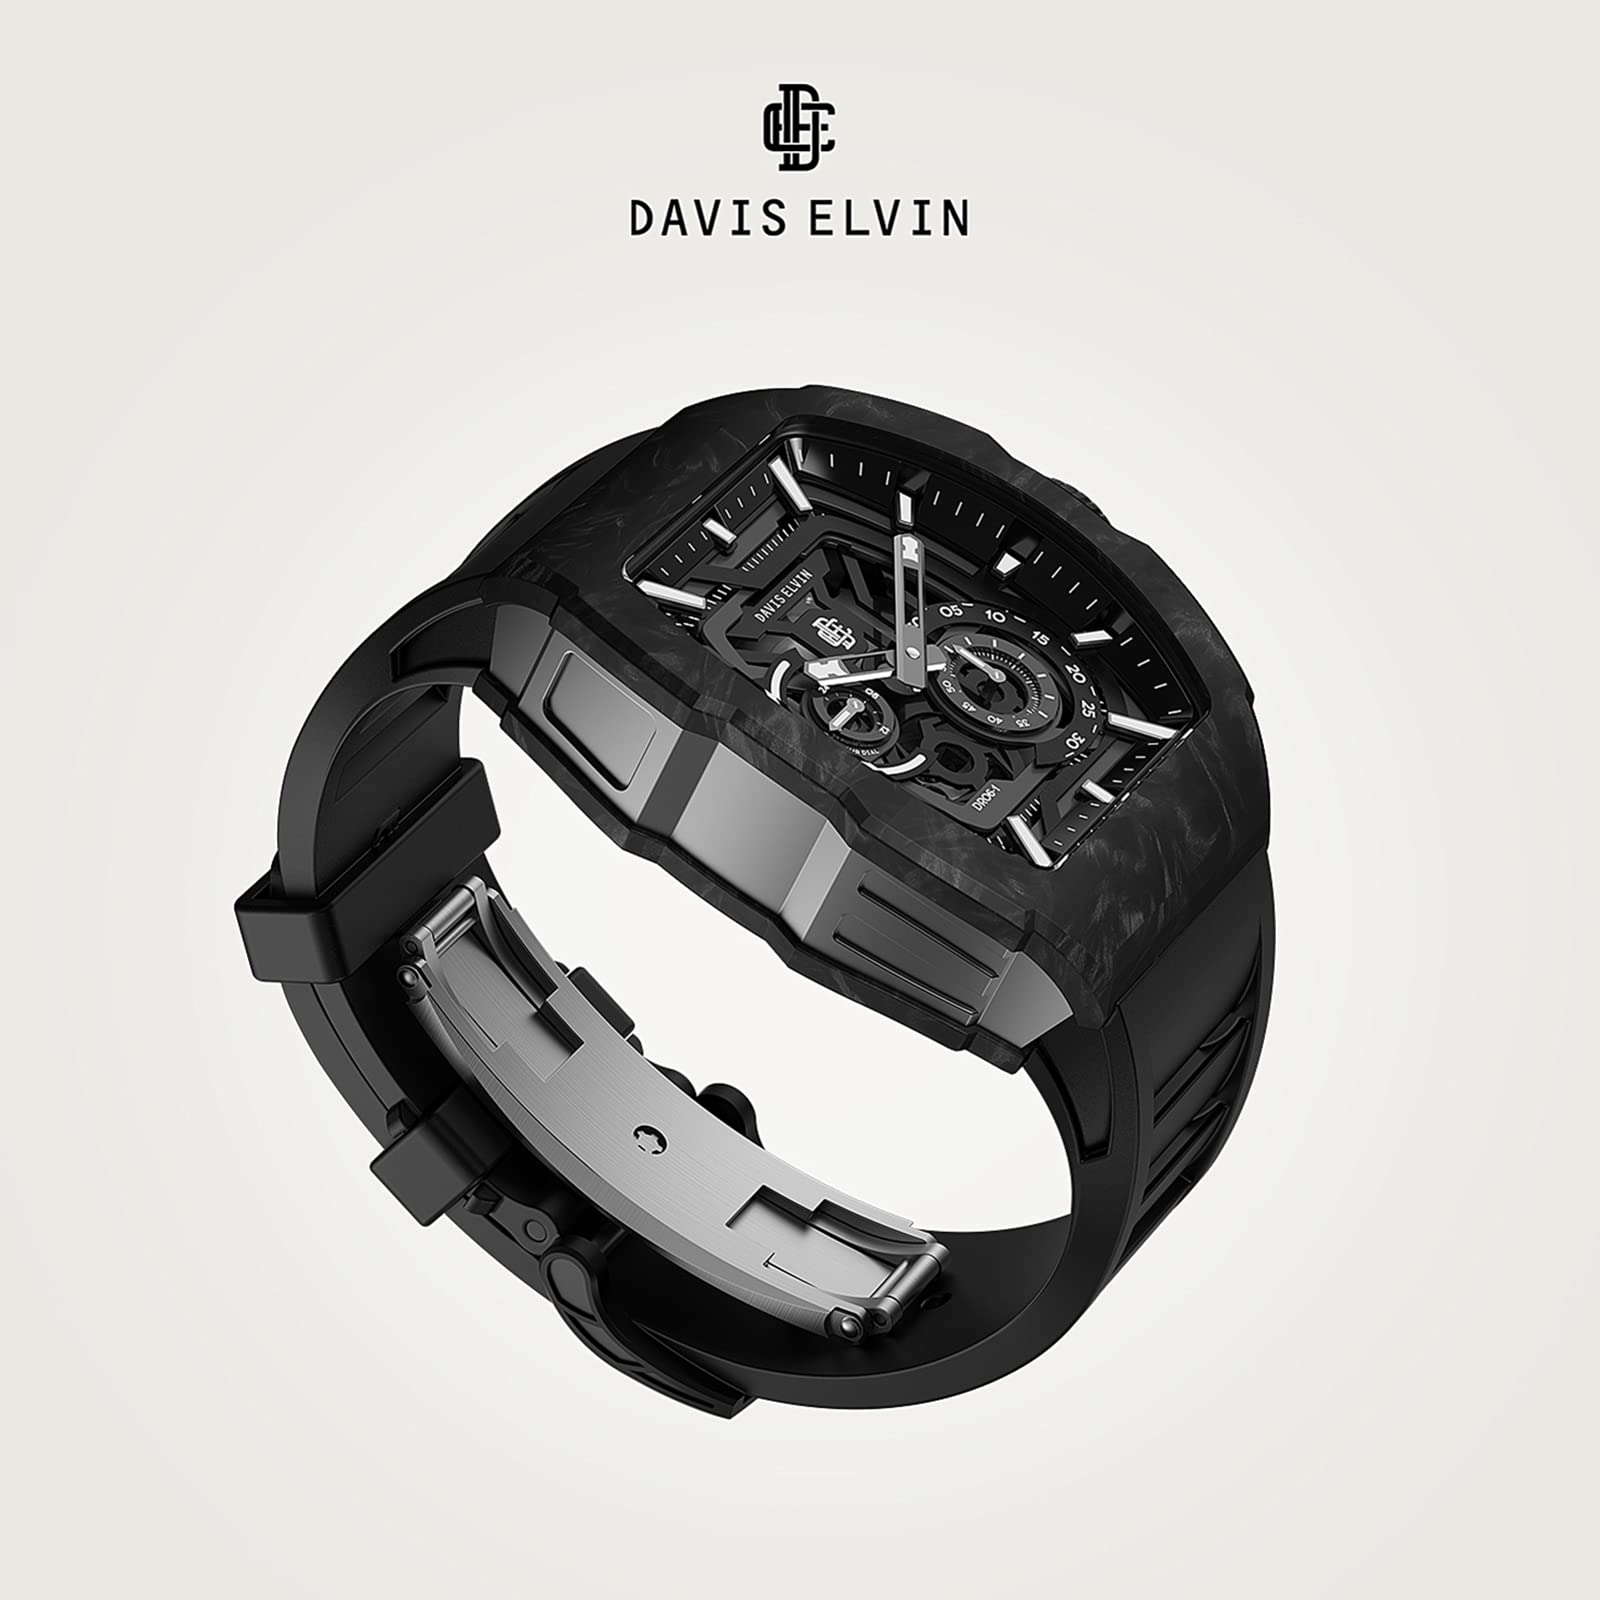 DAVIS ELVIN Tonneau Design Fashion Wrist Watch Carbon Fiber Automatic Movement Mechanical Watch Men's Wristwatch Birthday Gift Big Surprise for Men-DR06-1